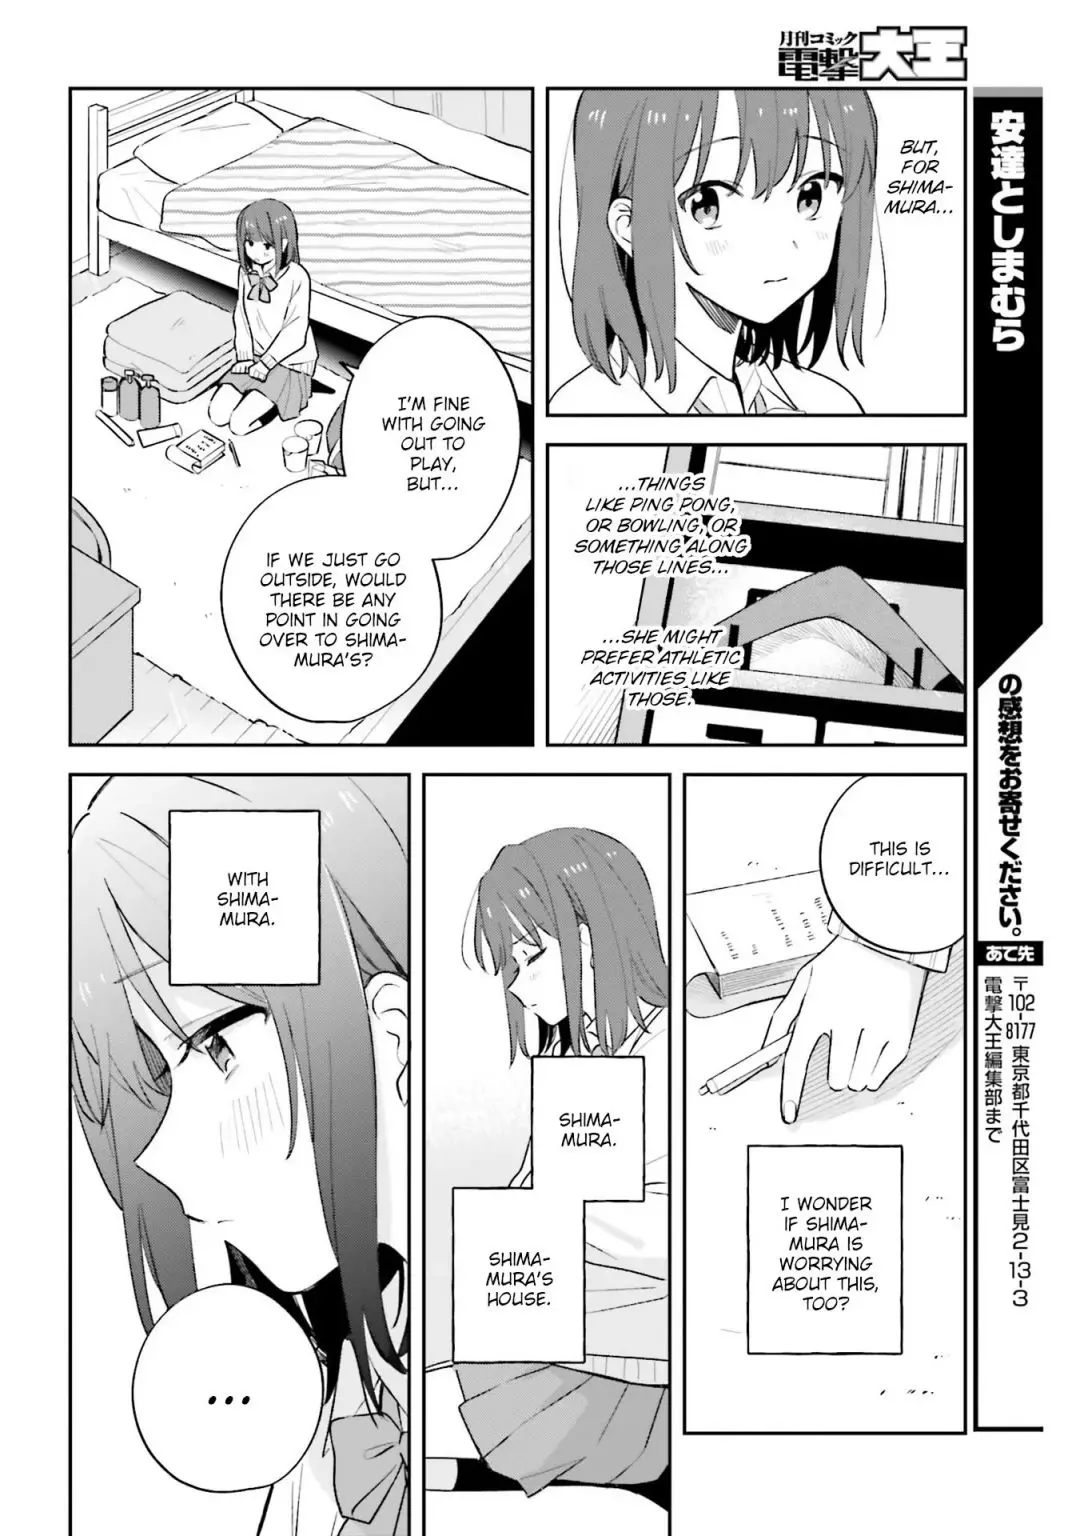 Adachi To Shimamura - 22 page 14